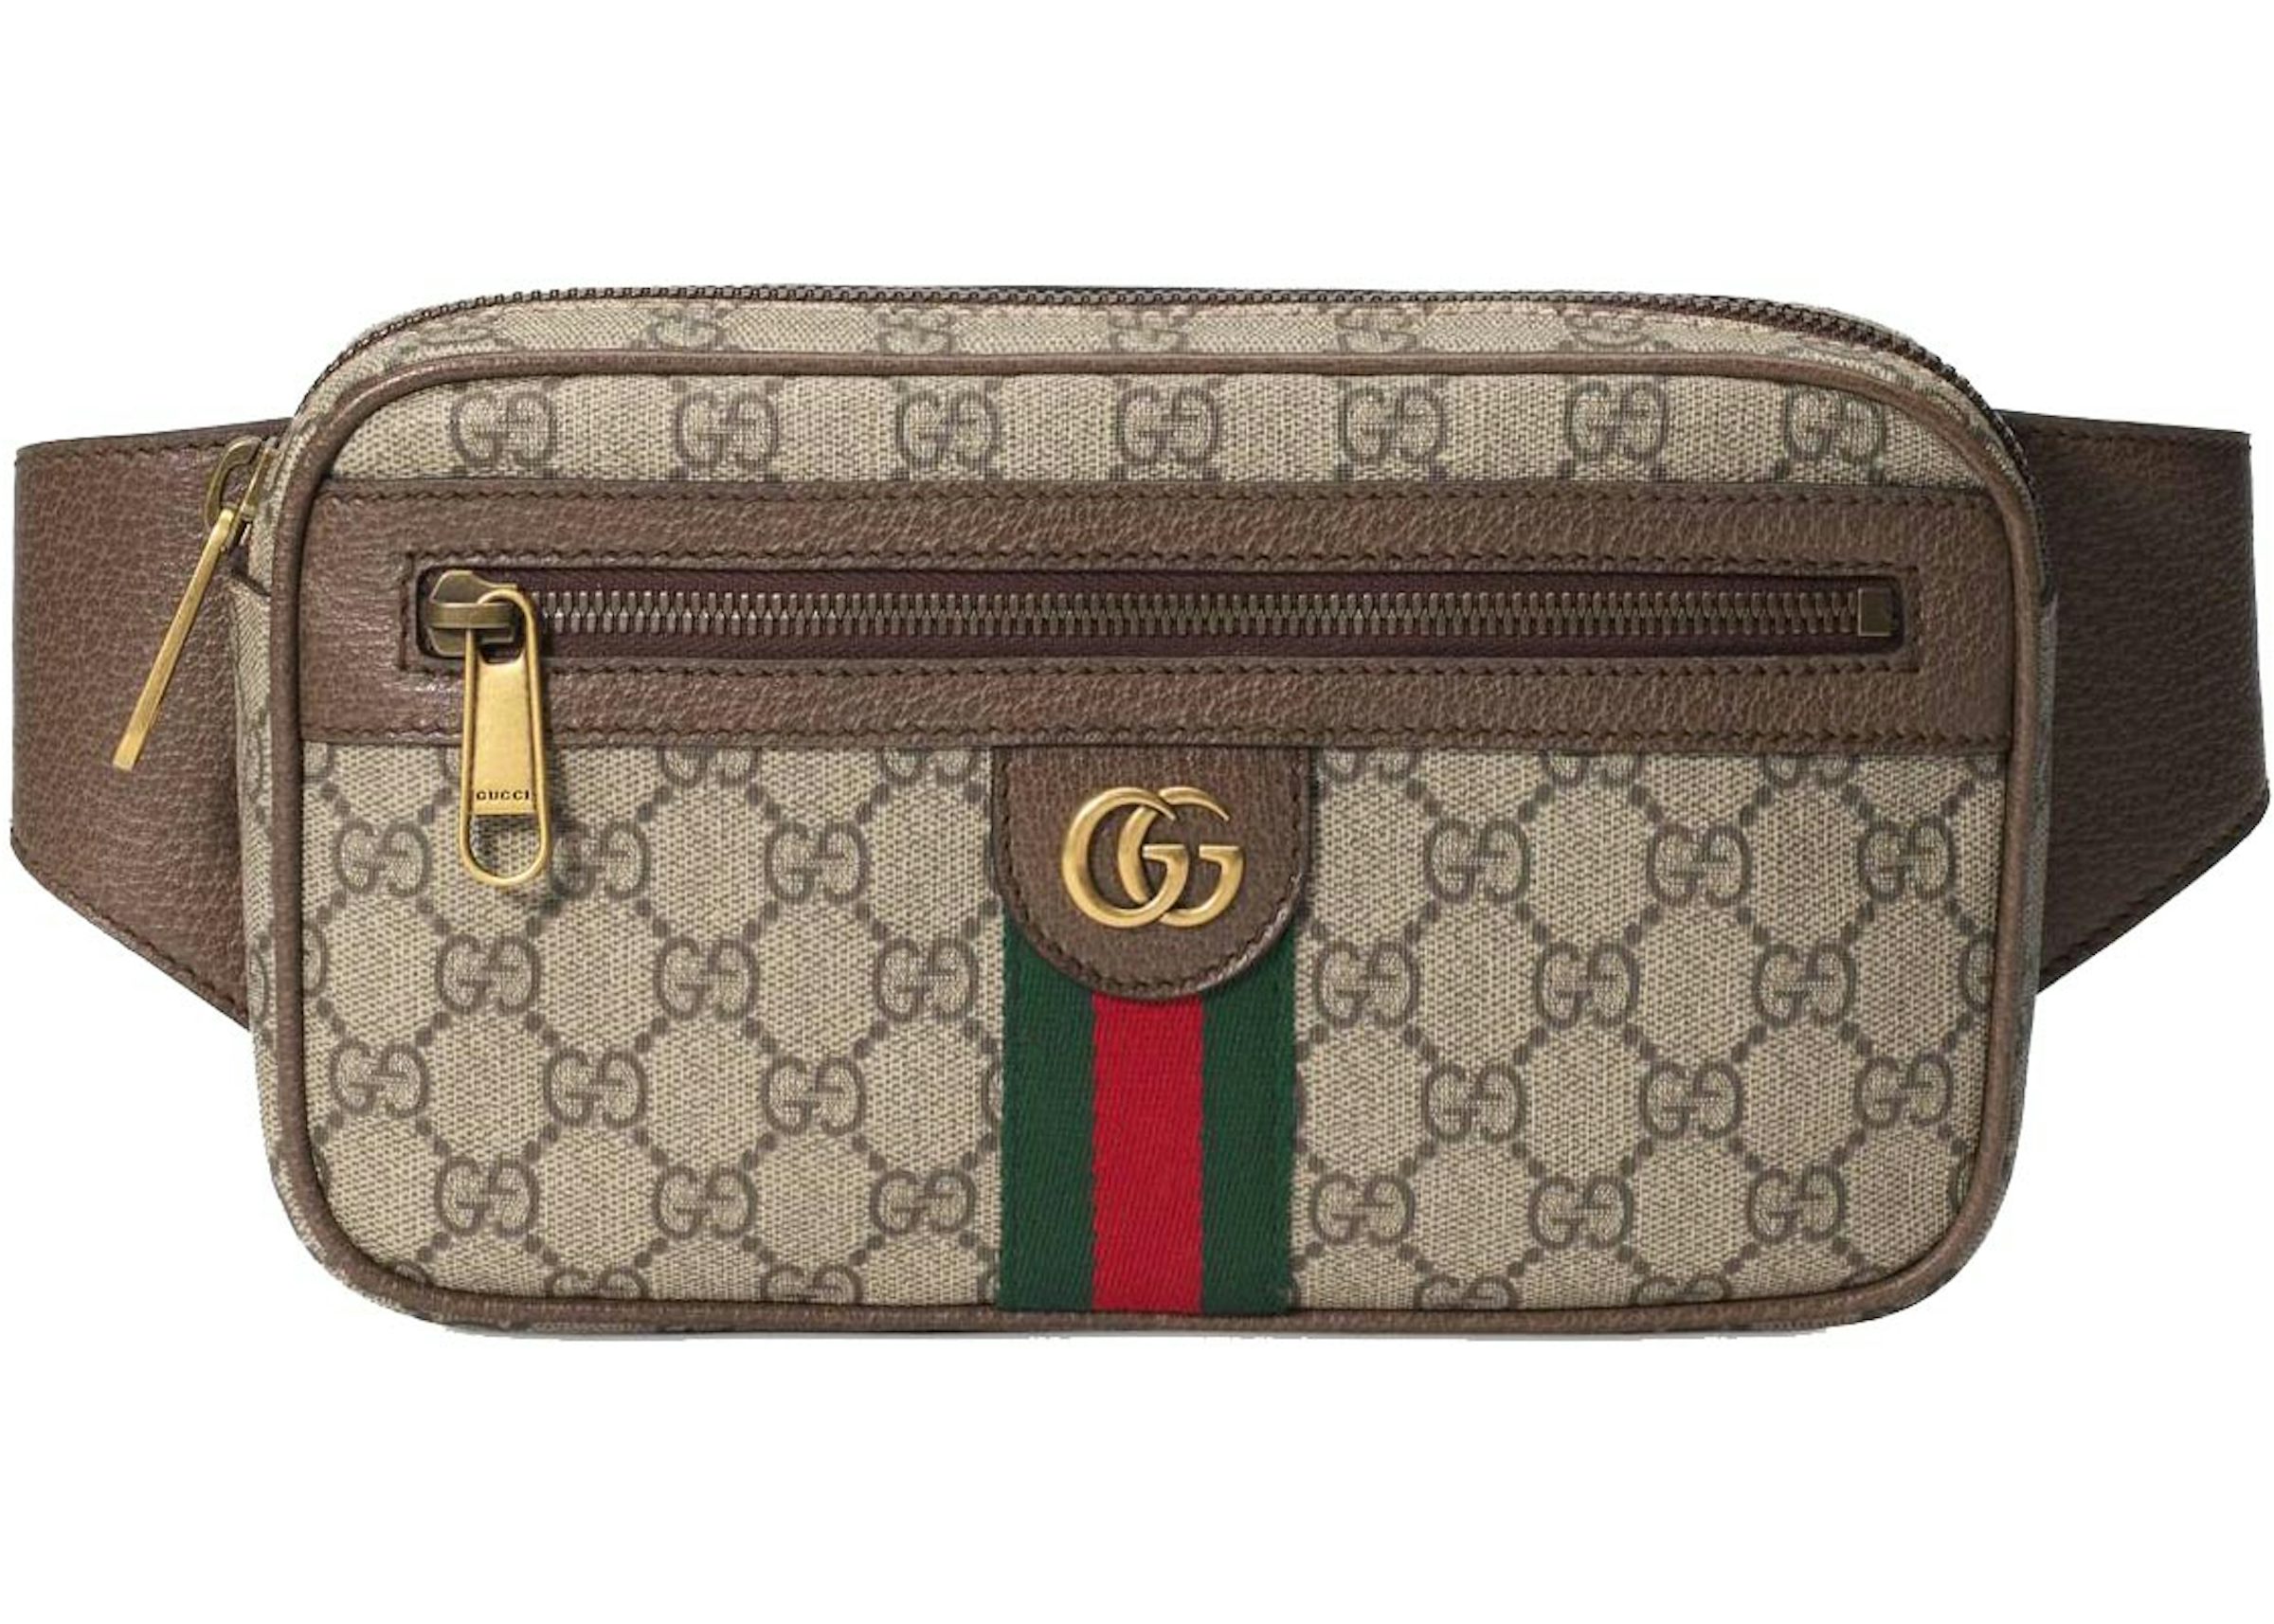 Gucci Ophidia GG Belt Bag Medium Beige/Ebony